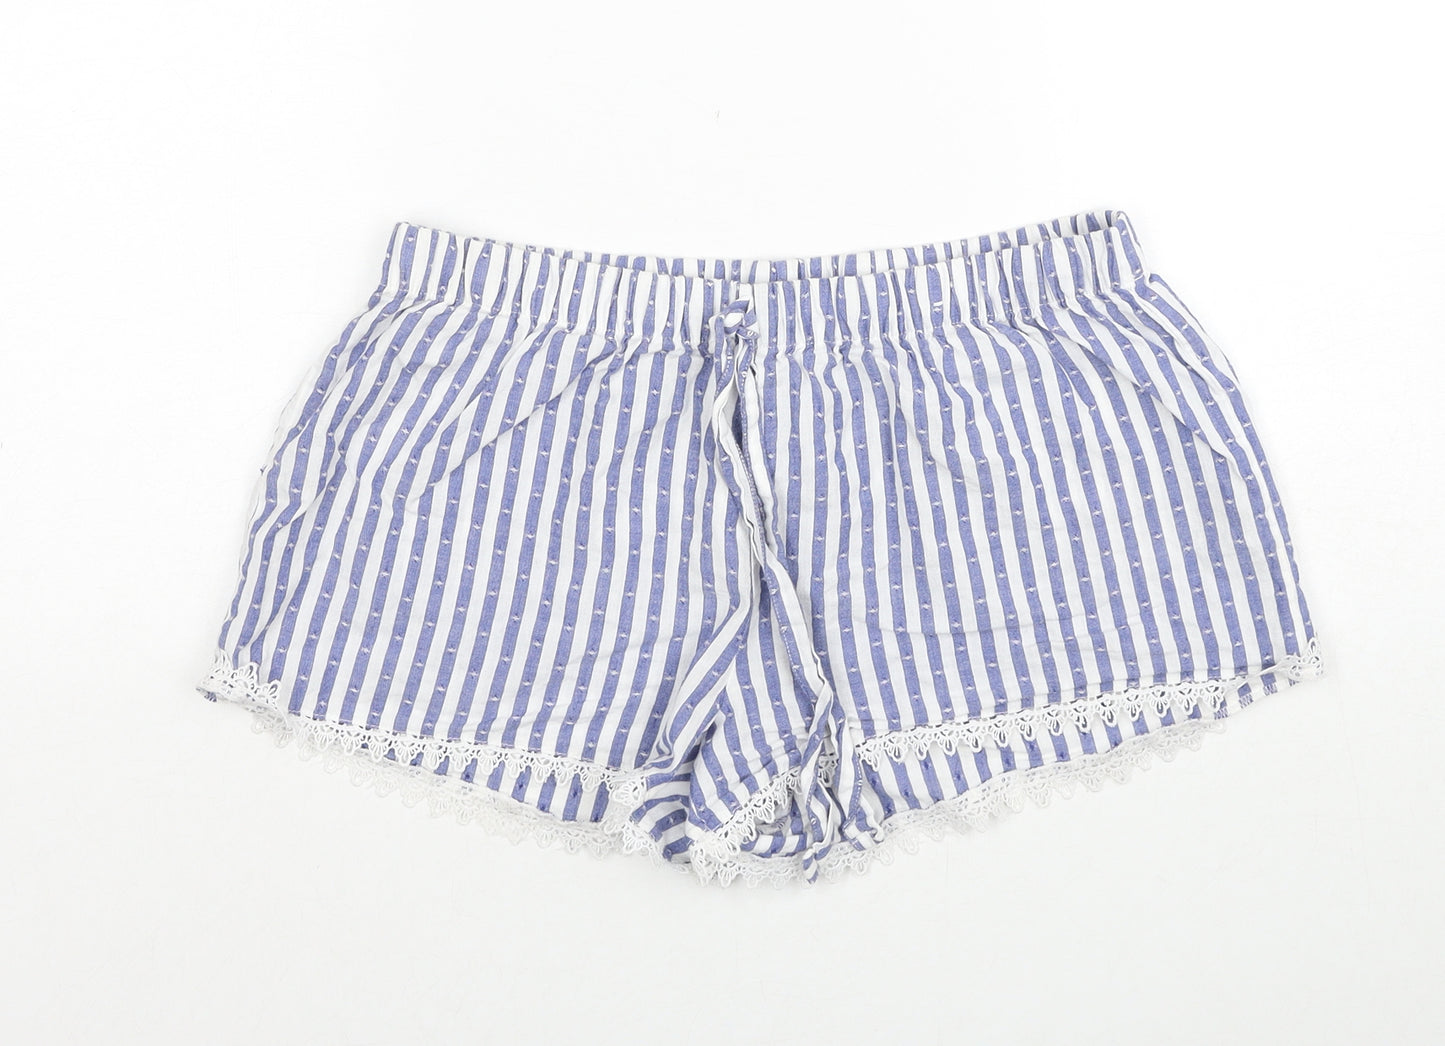 Primark Womens Blue Striped Cotton Basic Shorts Size 10 Regular Drawstring - Size 10-12, Lace Detail